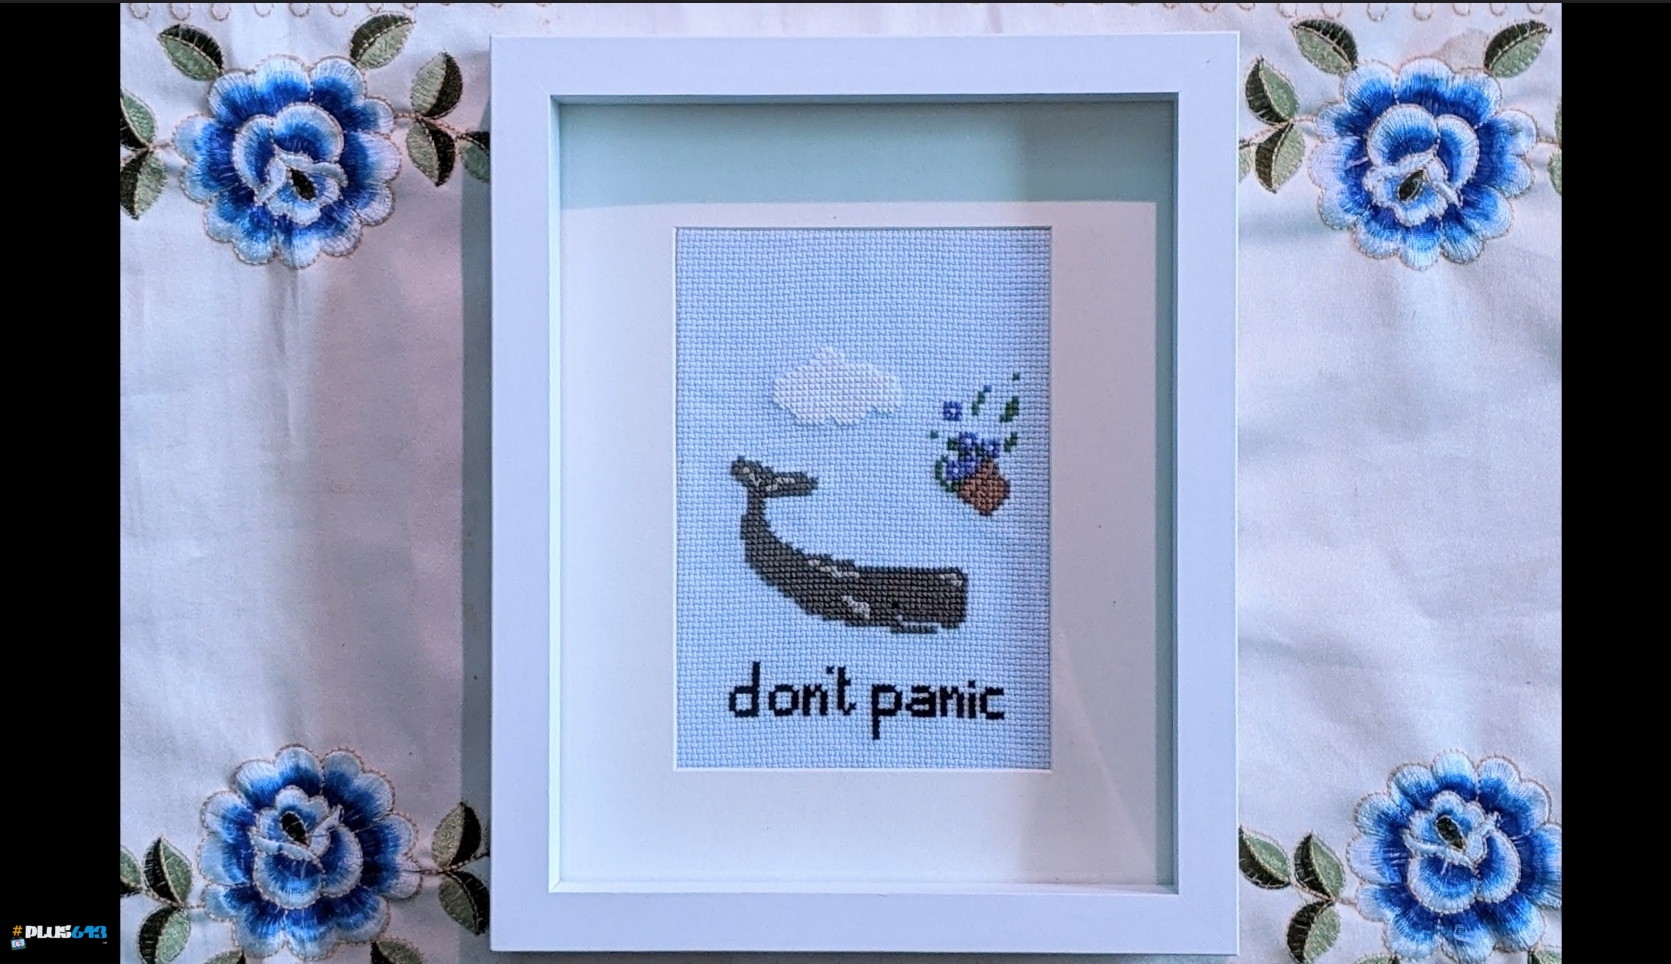 don't panic 